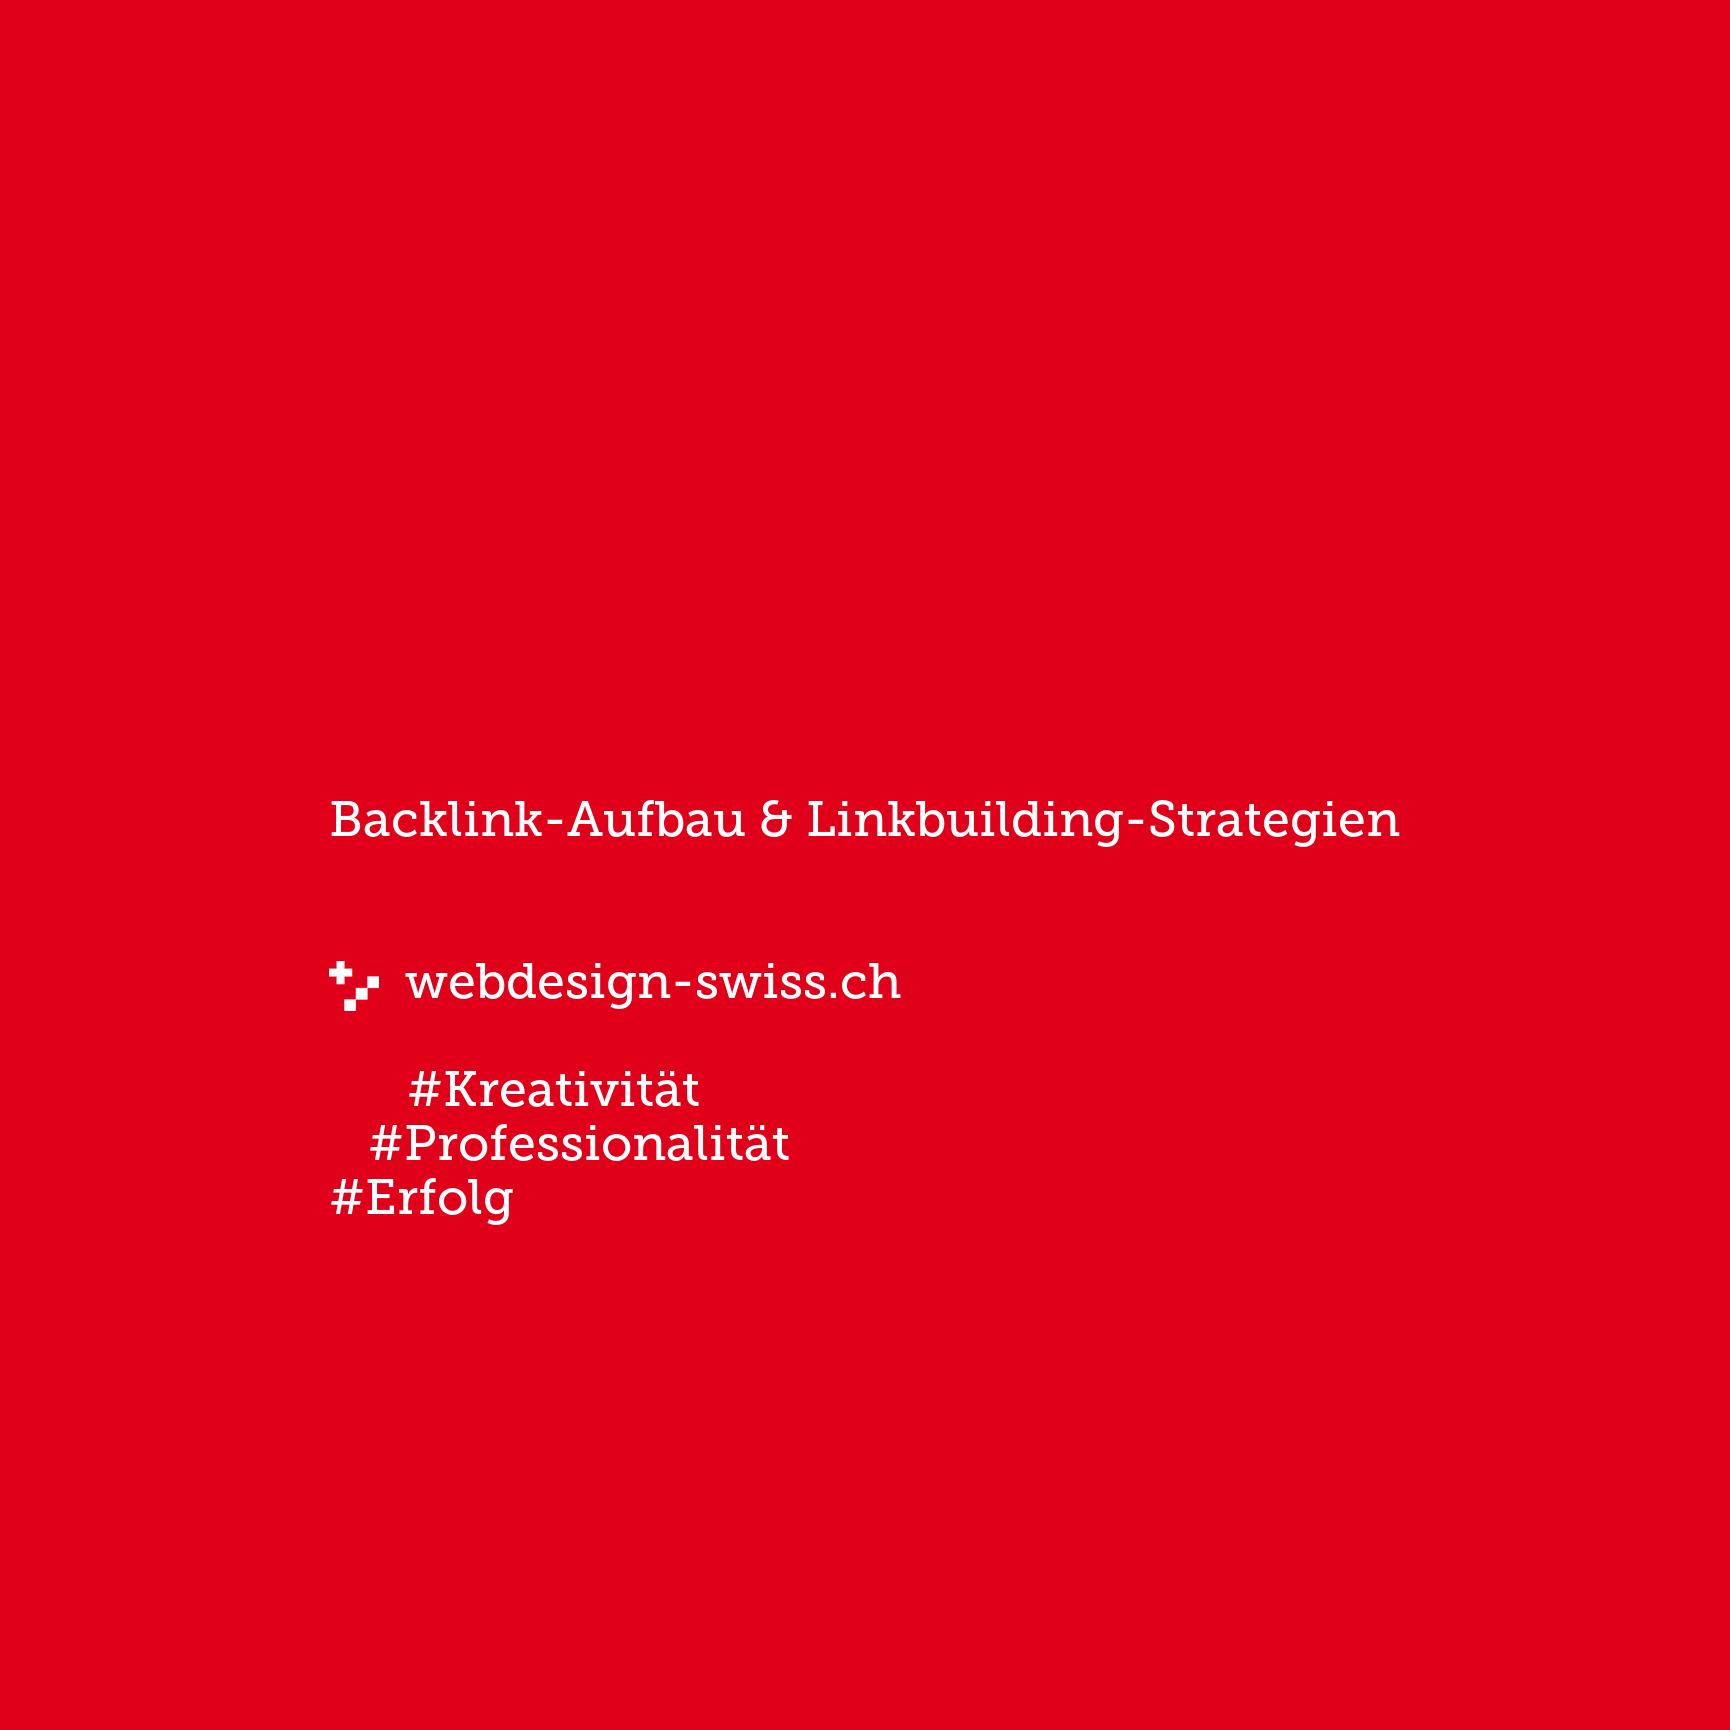 Backlink-Aufbau & Linkbuilding-Strategien